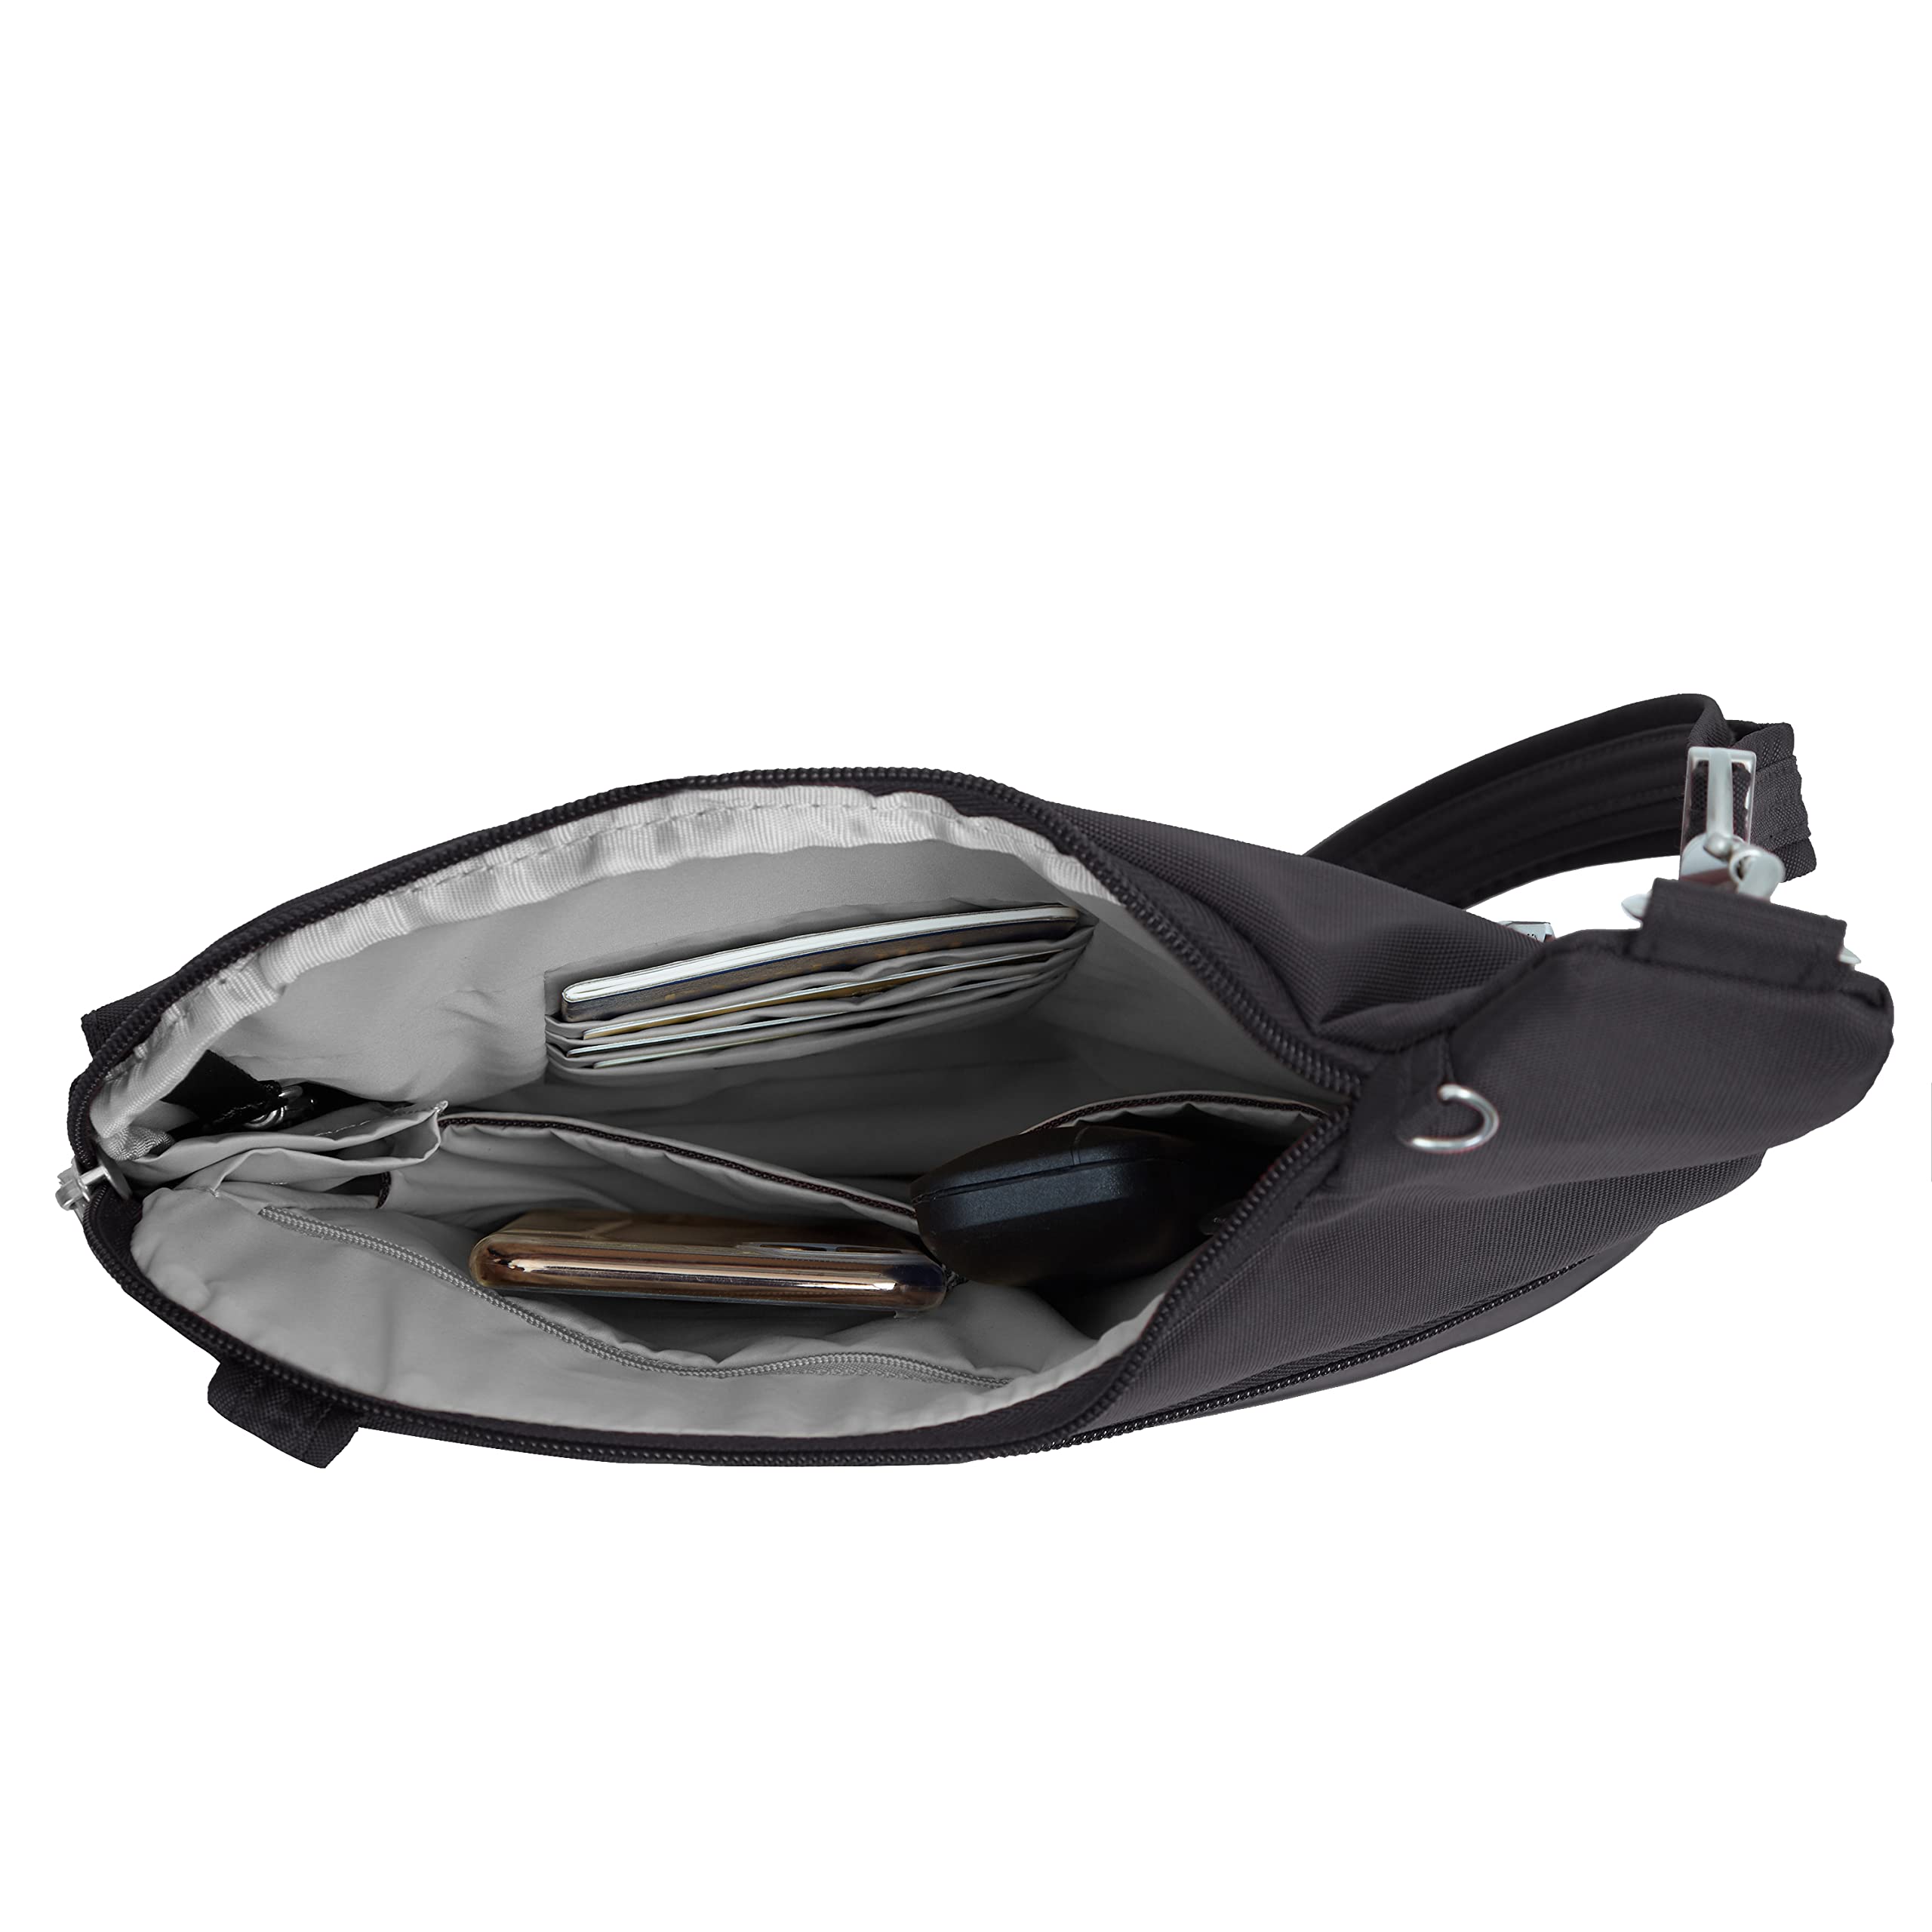 Travelon Anti-Theft Cross-Body Bag, Black, One Size